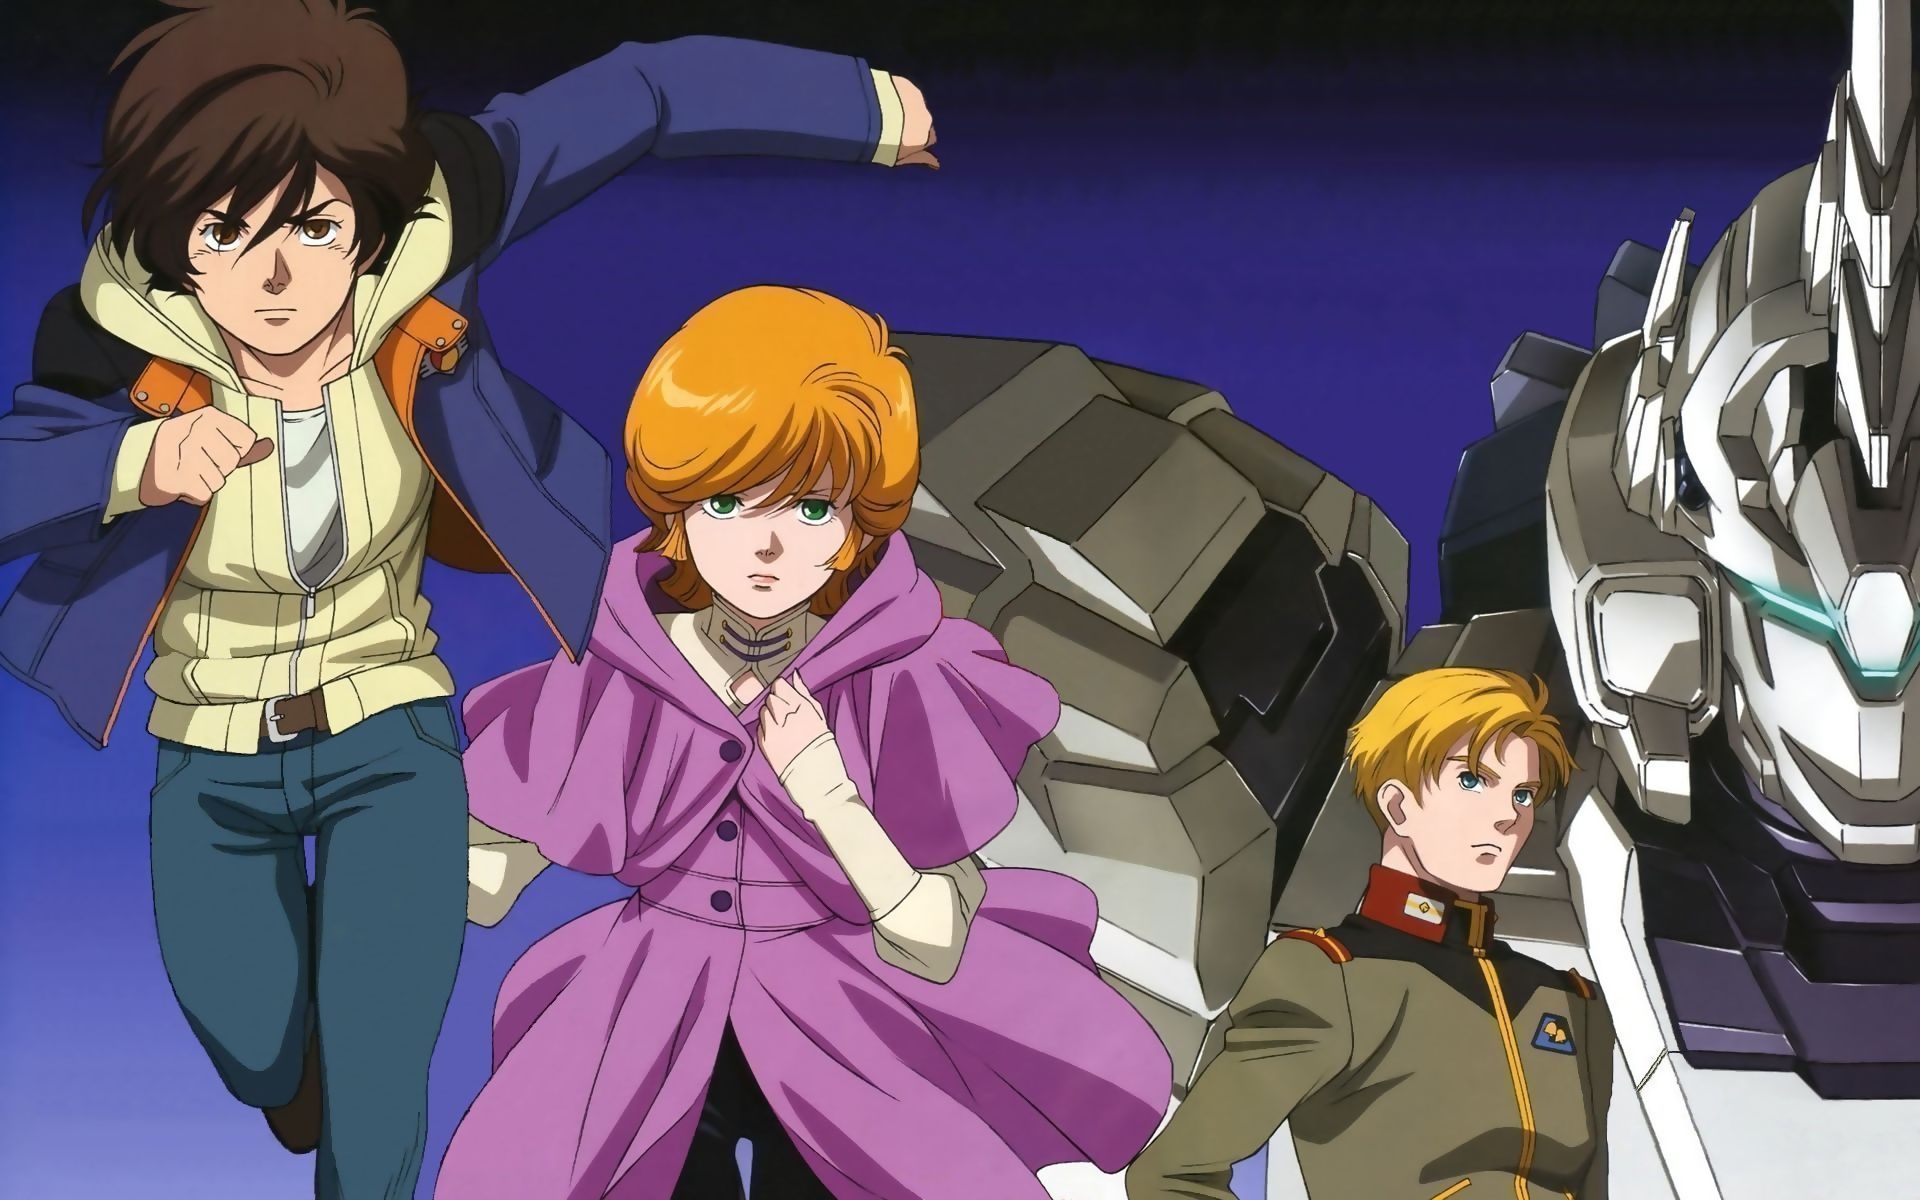 Anime Mobile Suit Gundam HD Wallpaper | Background Image